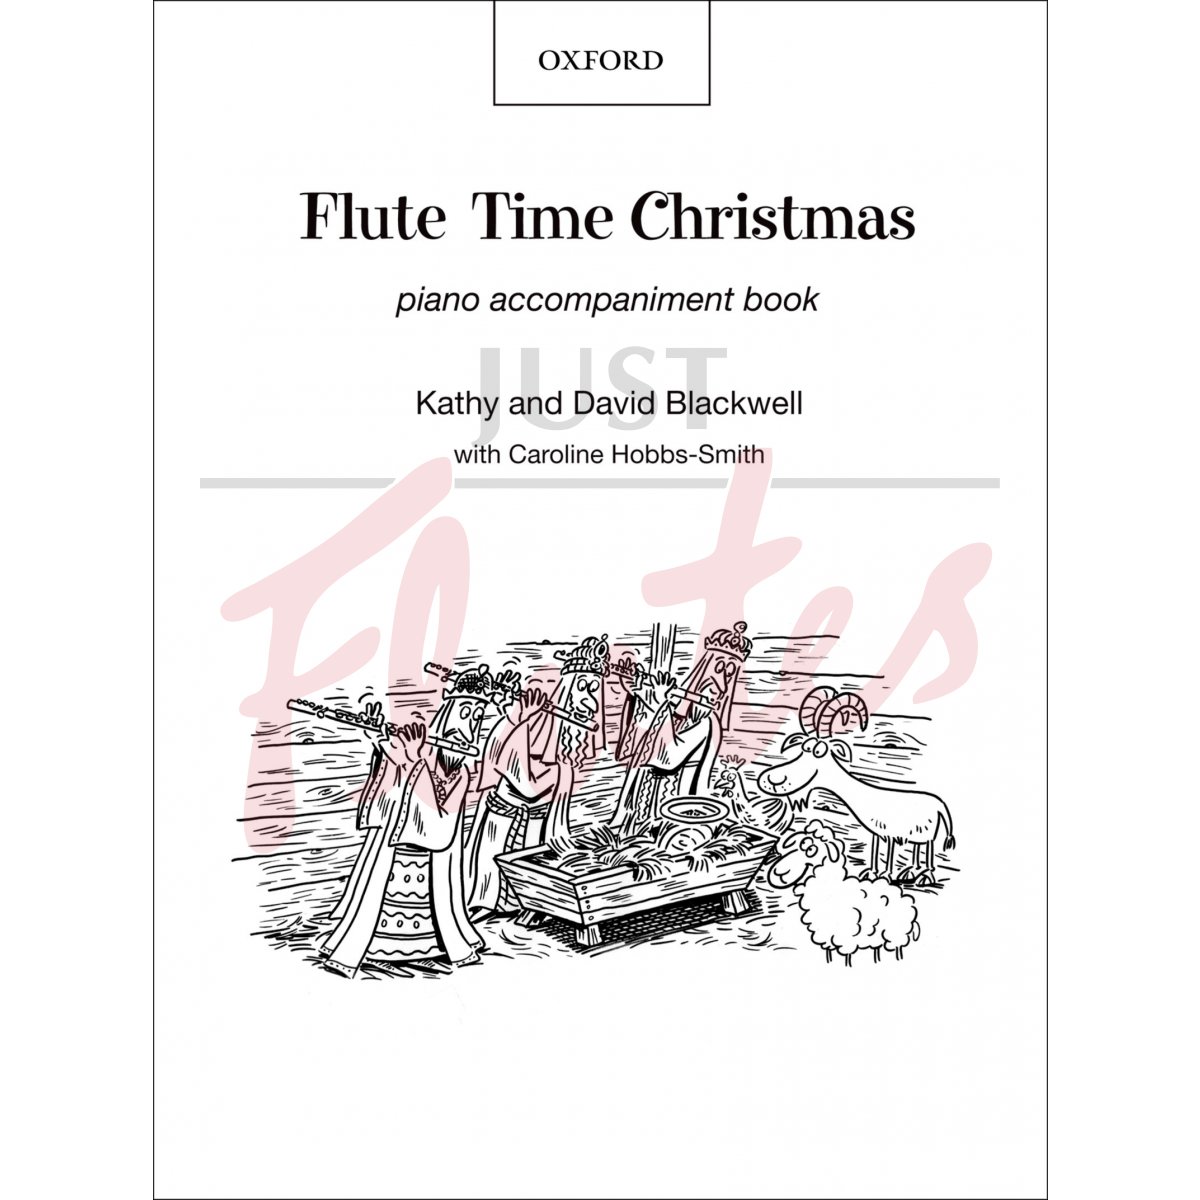 Flute Time Christmas [Piano Accompaniment Book]